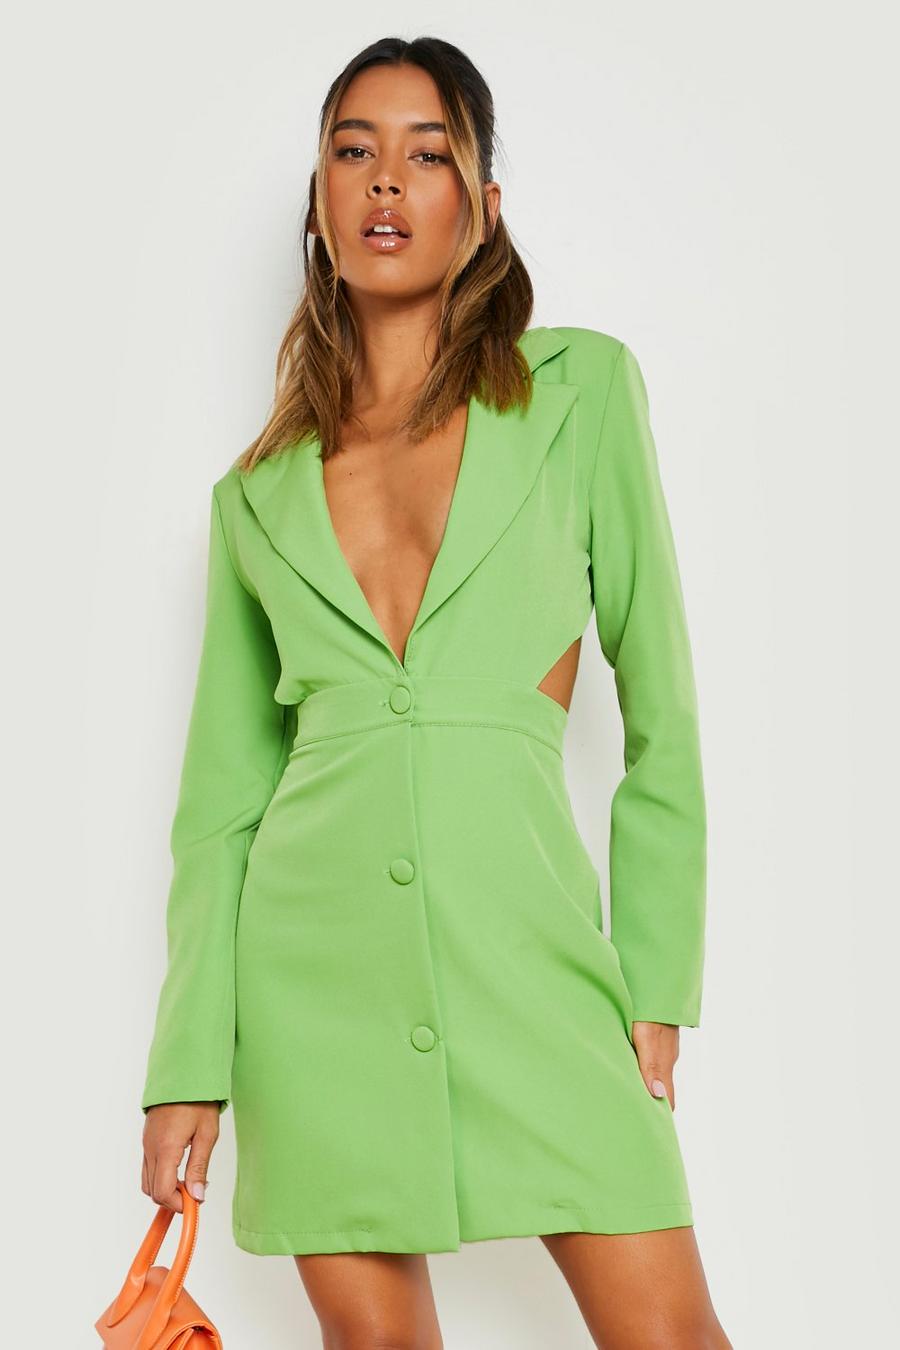 Apple green gerde Cut Out Open Back Tailored Blazer Dress